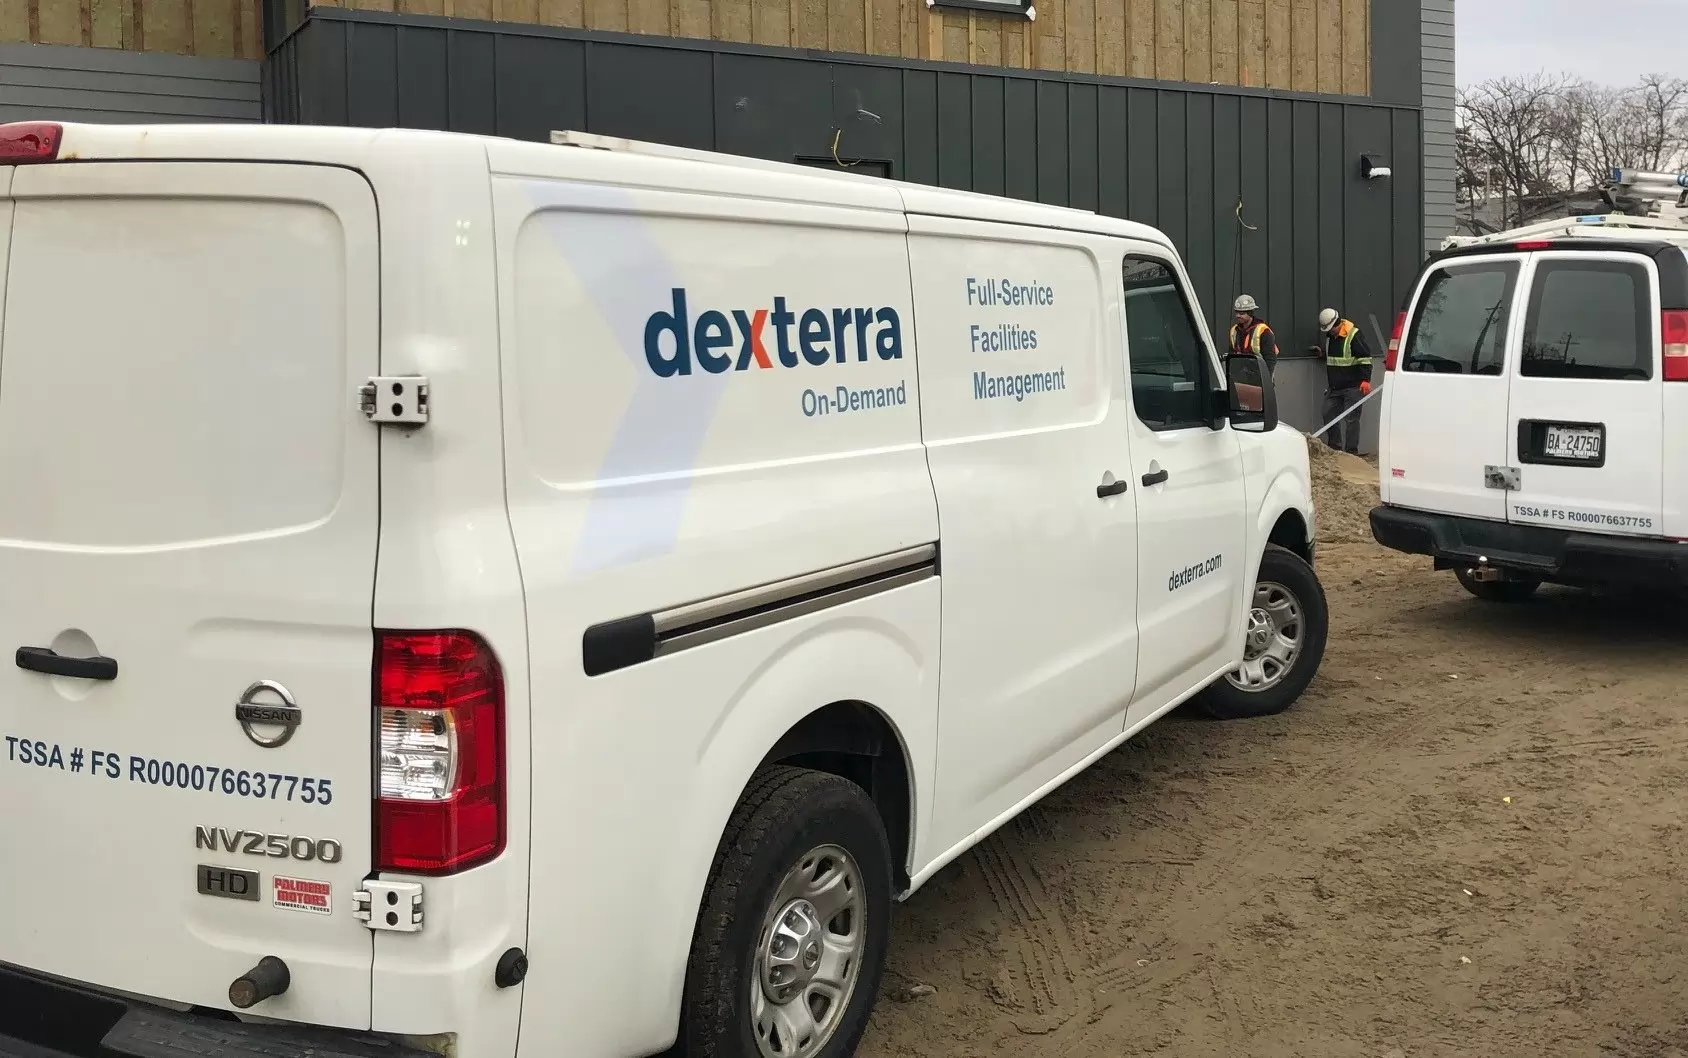 Dexterra on-demand technical services on site